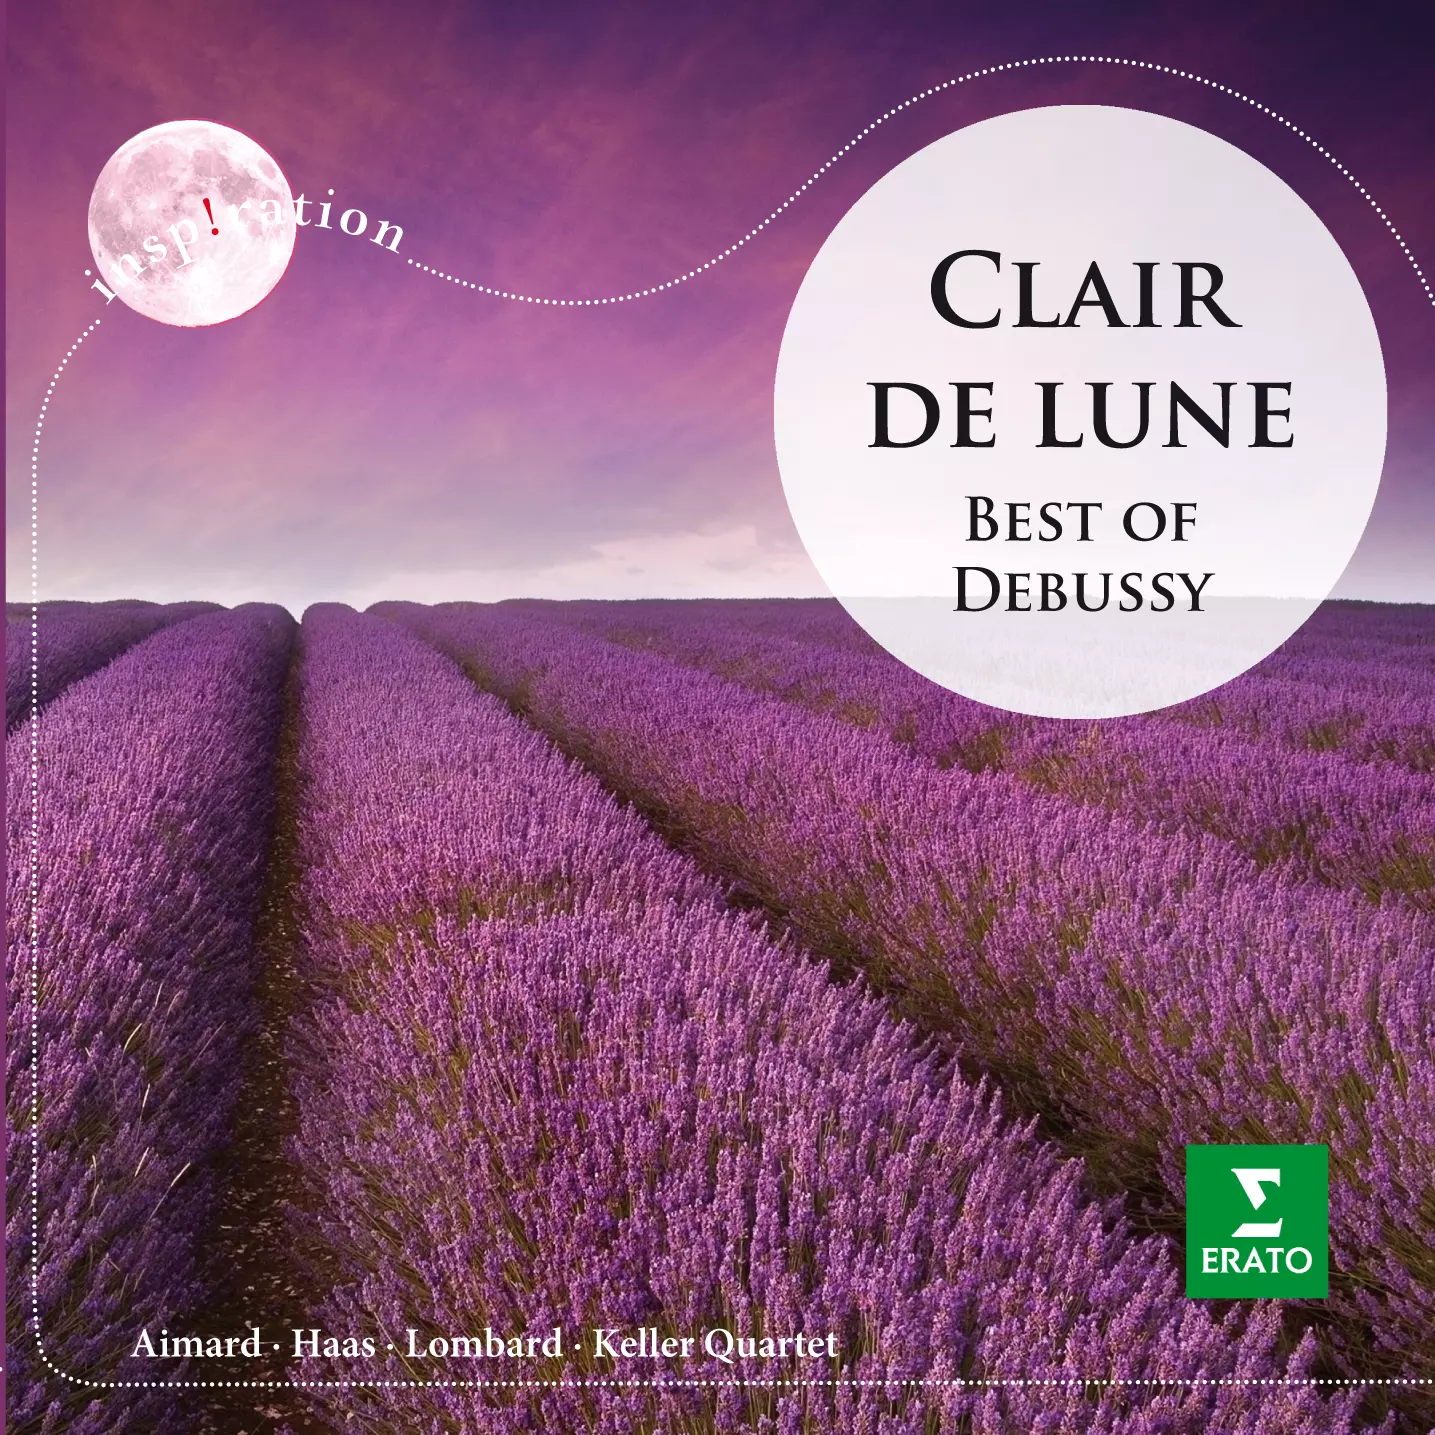 Clair de lune: Best of Debussy